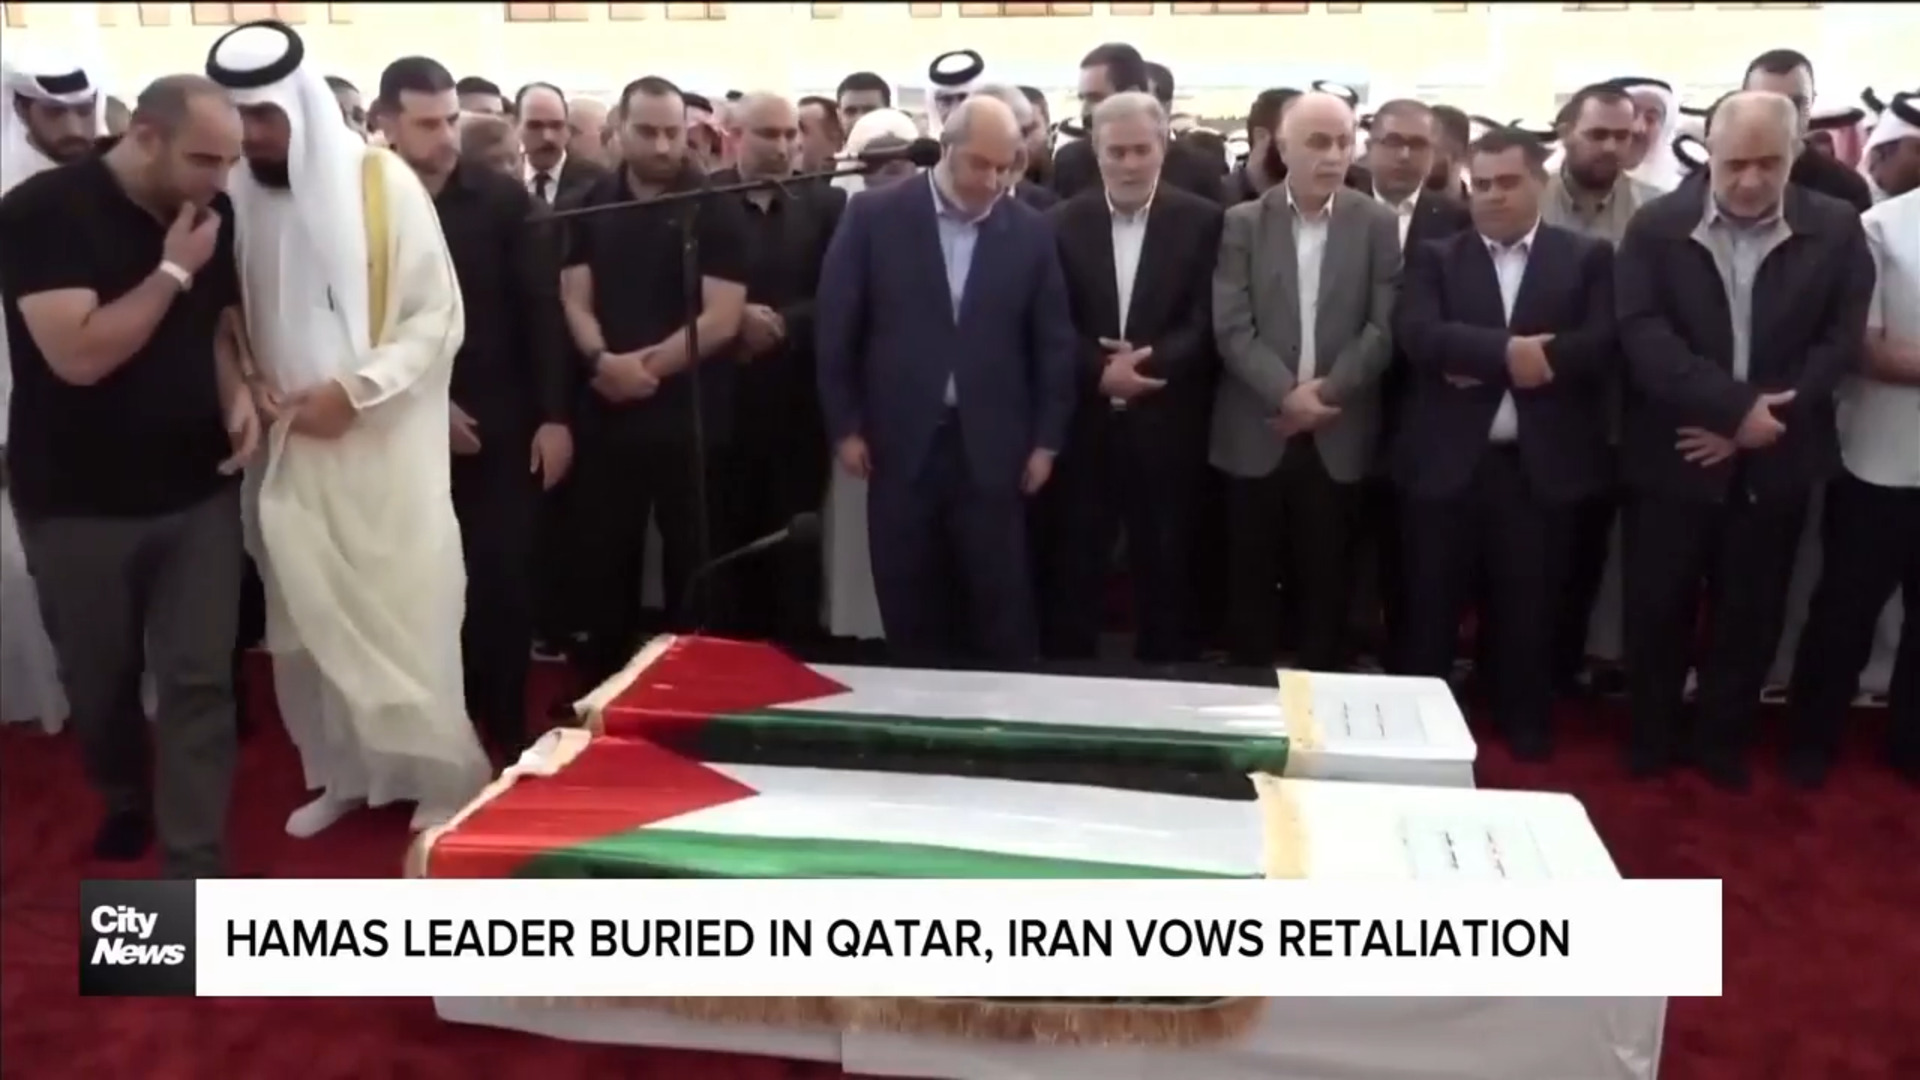 Hamas leader buried in Qatar, Iran vows retaliation